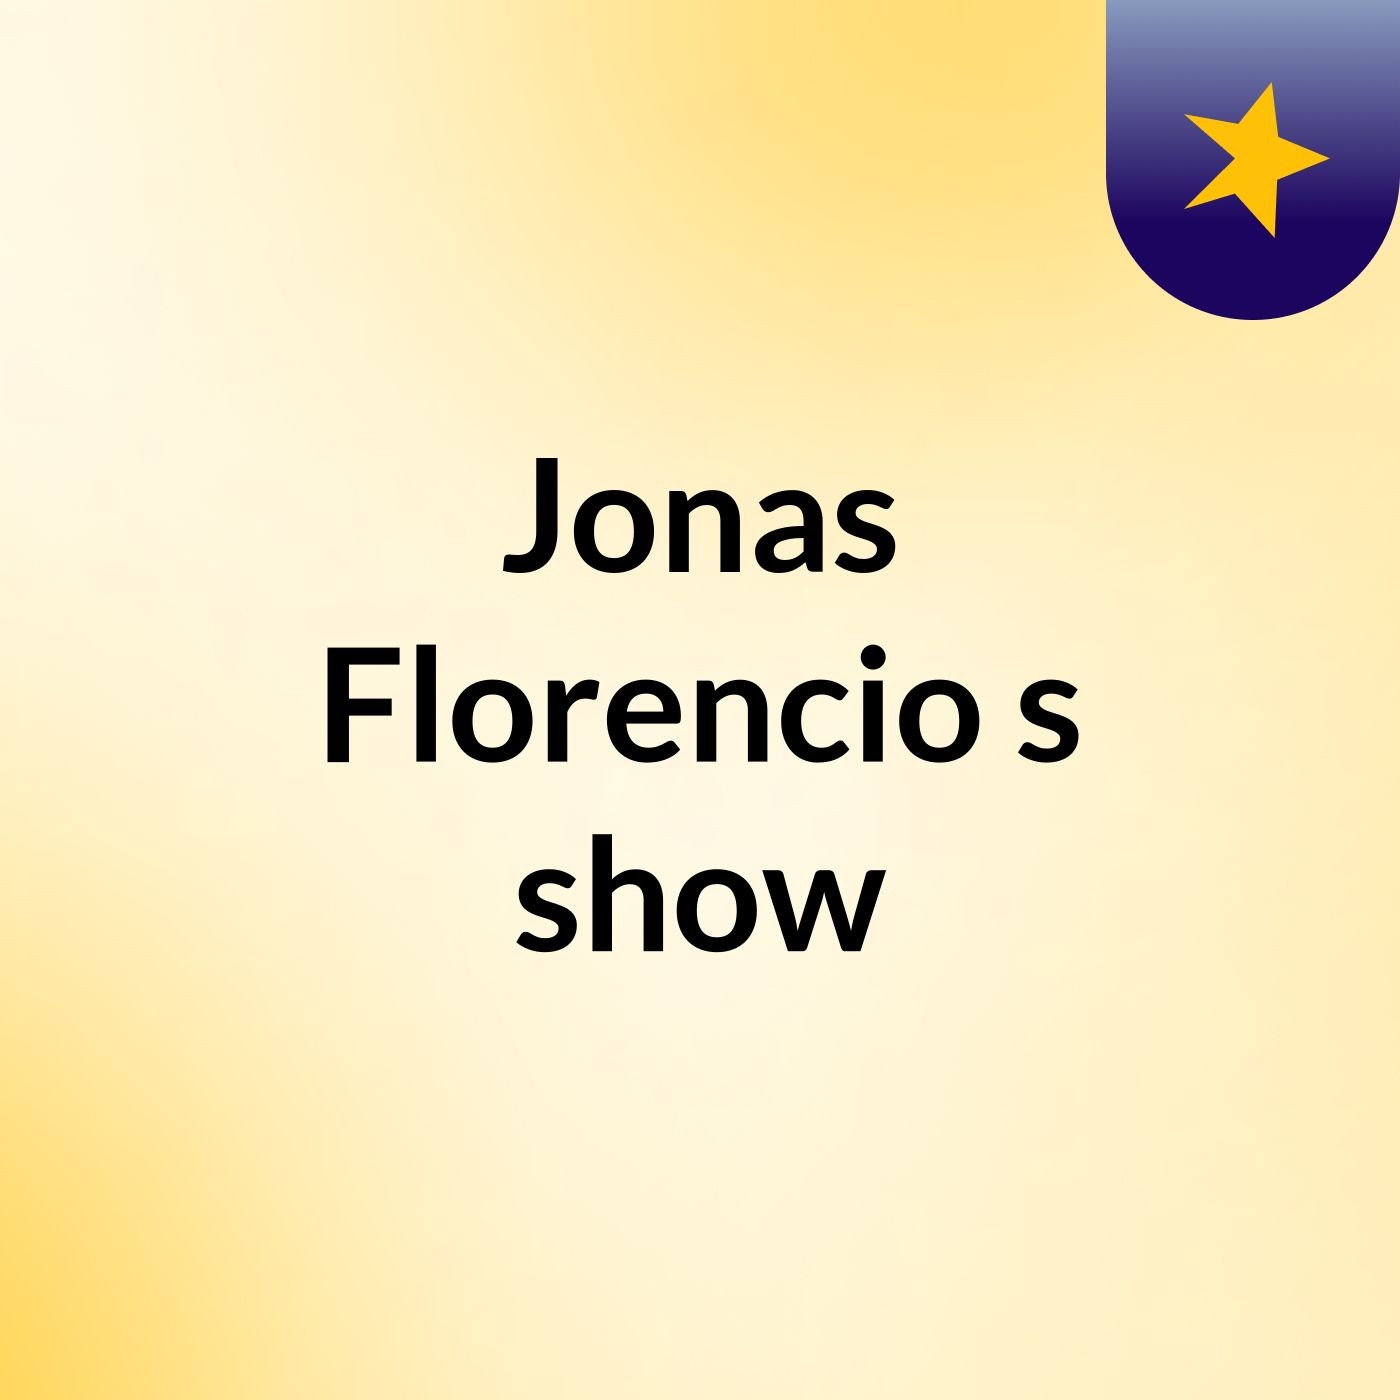 Jonas Florencio's show